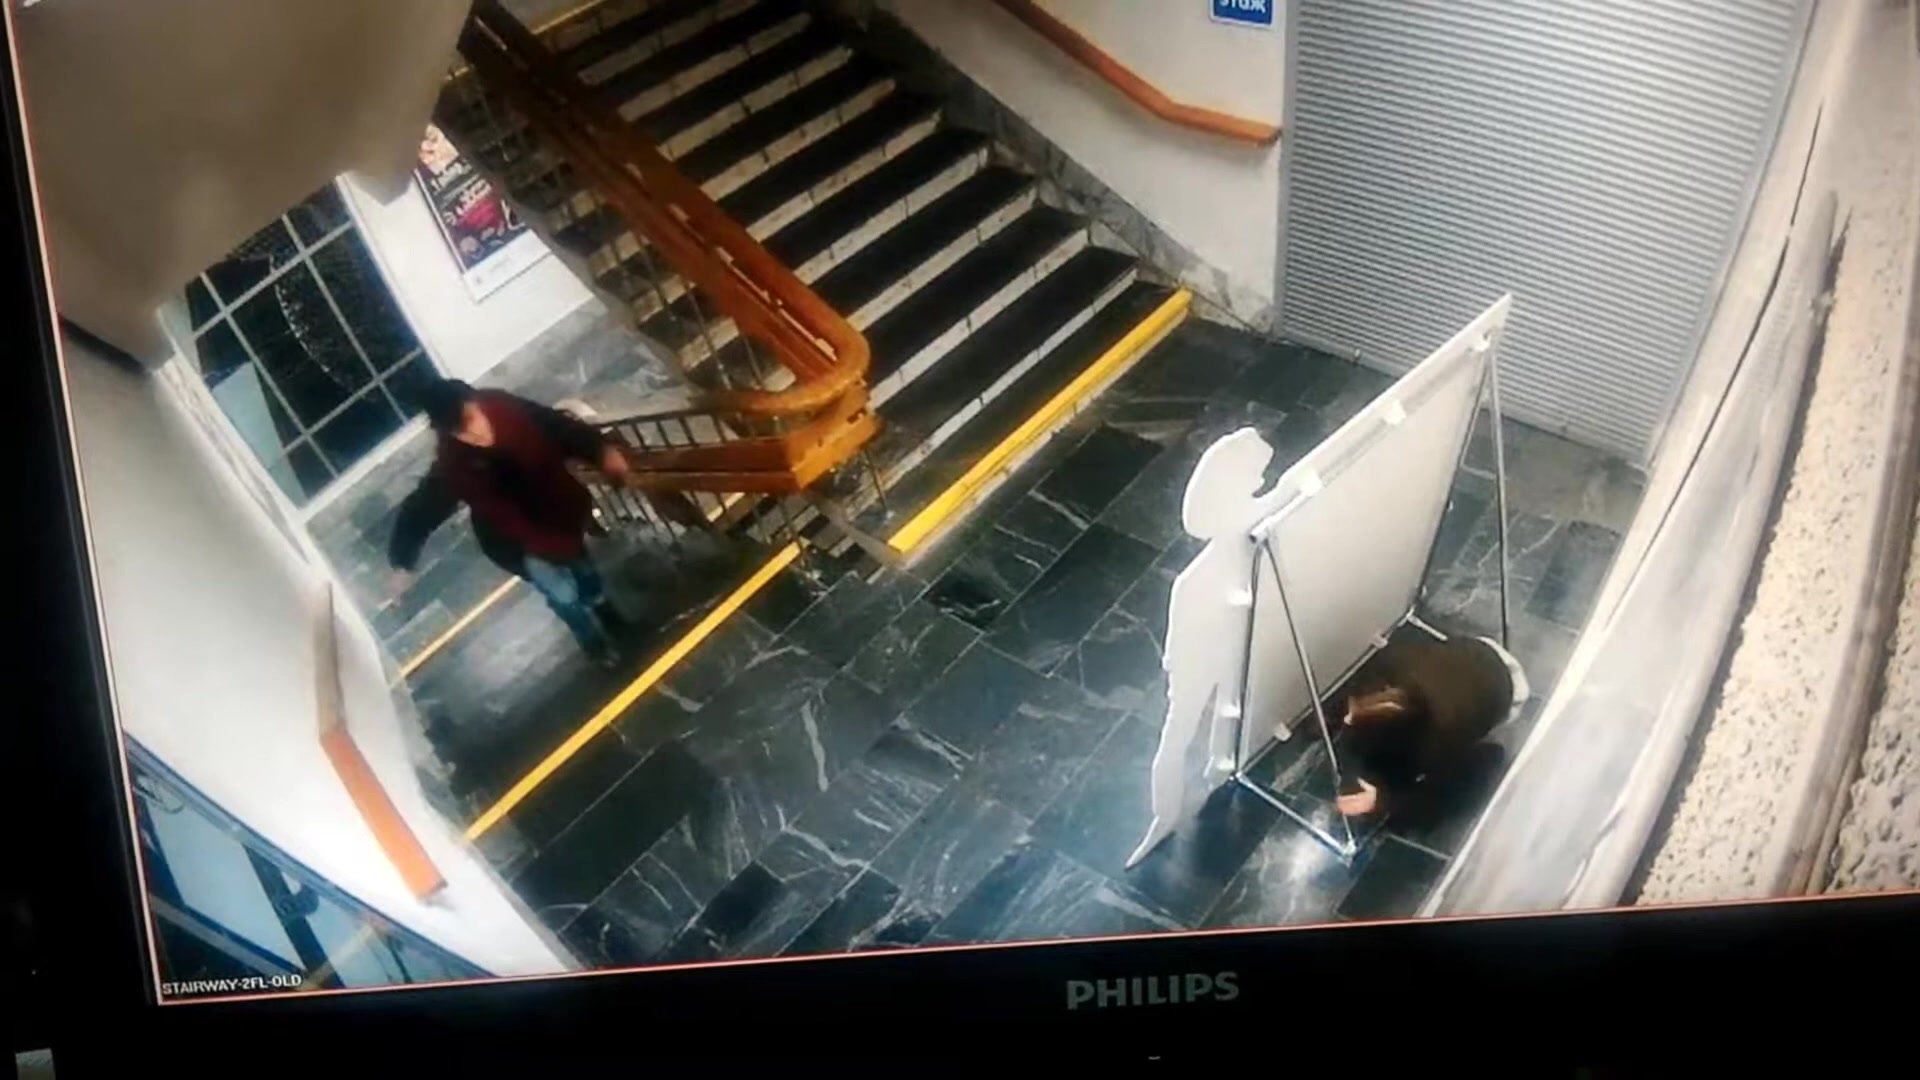 Girl pees behind sign on stairway